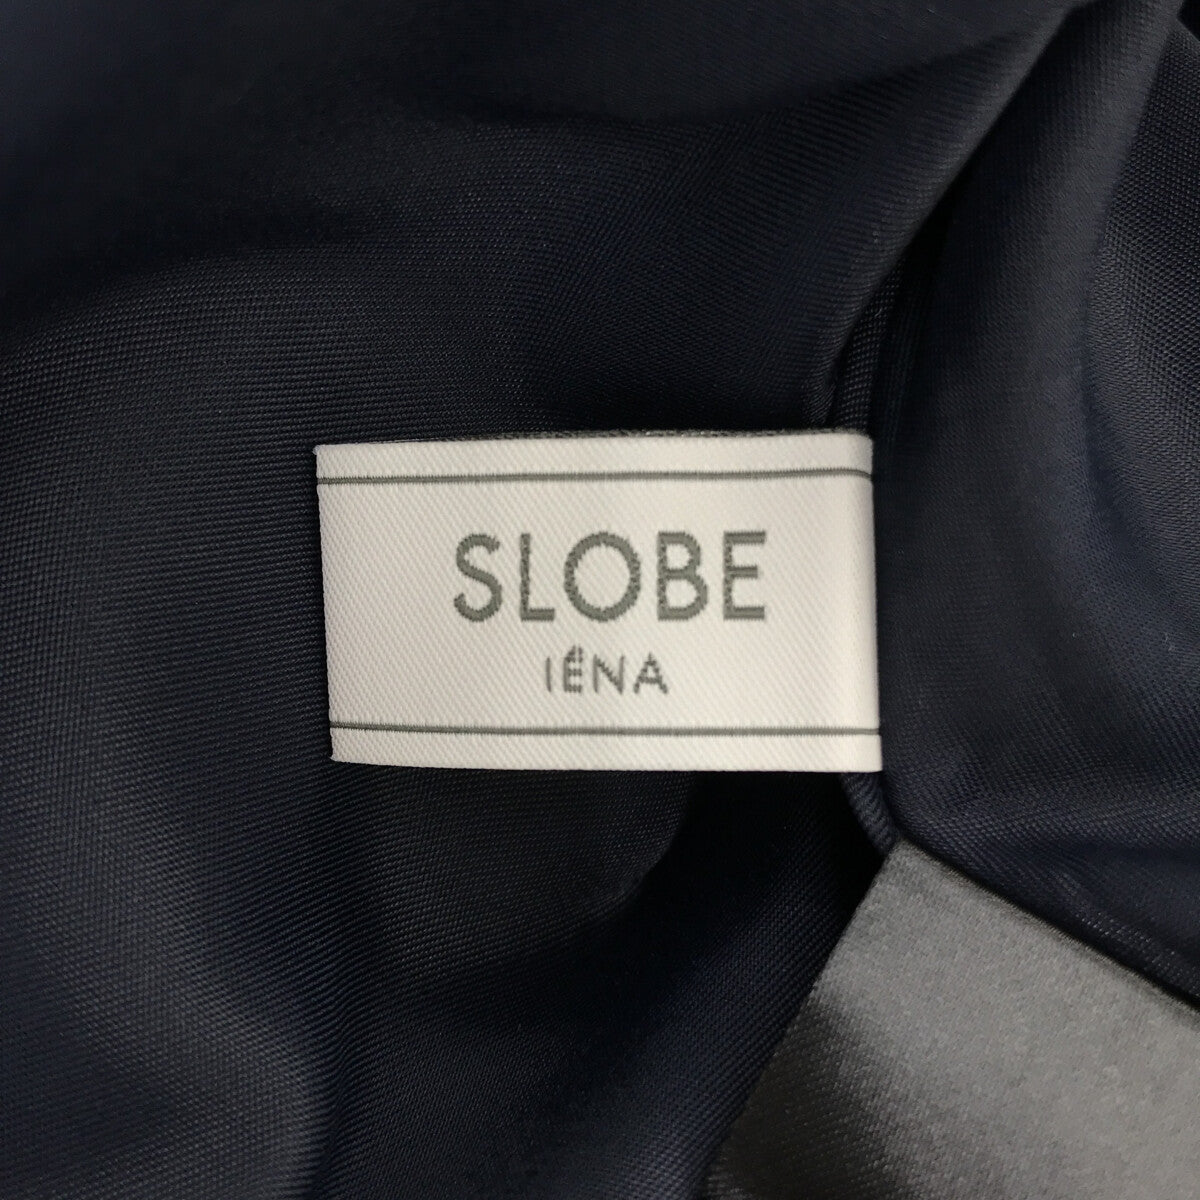 SLOBE IENA / スローブイエナ | 2021SS | フィブリルサテン フレアスカート | 38 | ネイビー | レディース